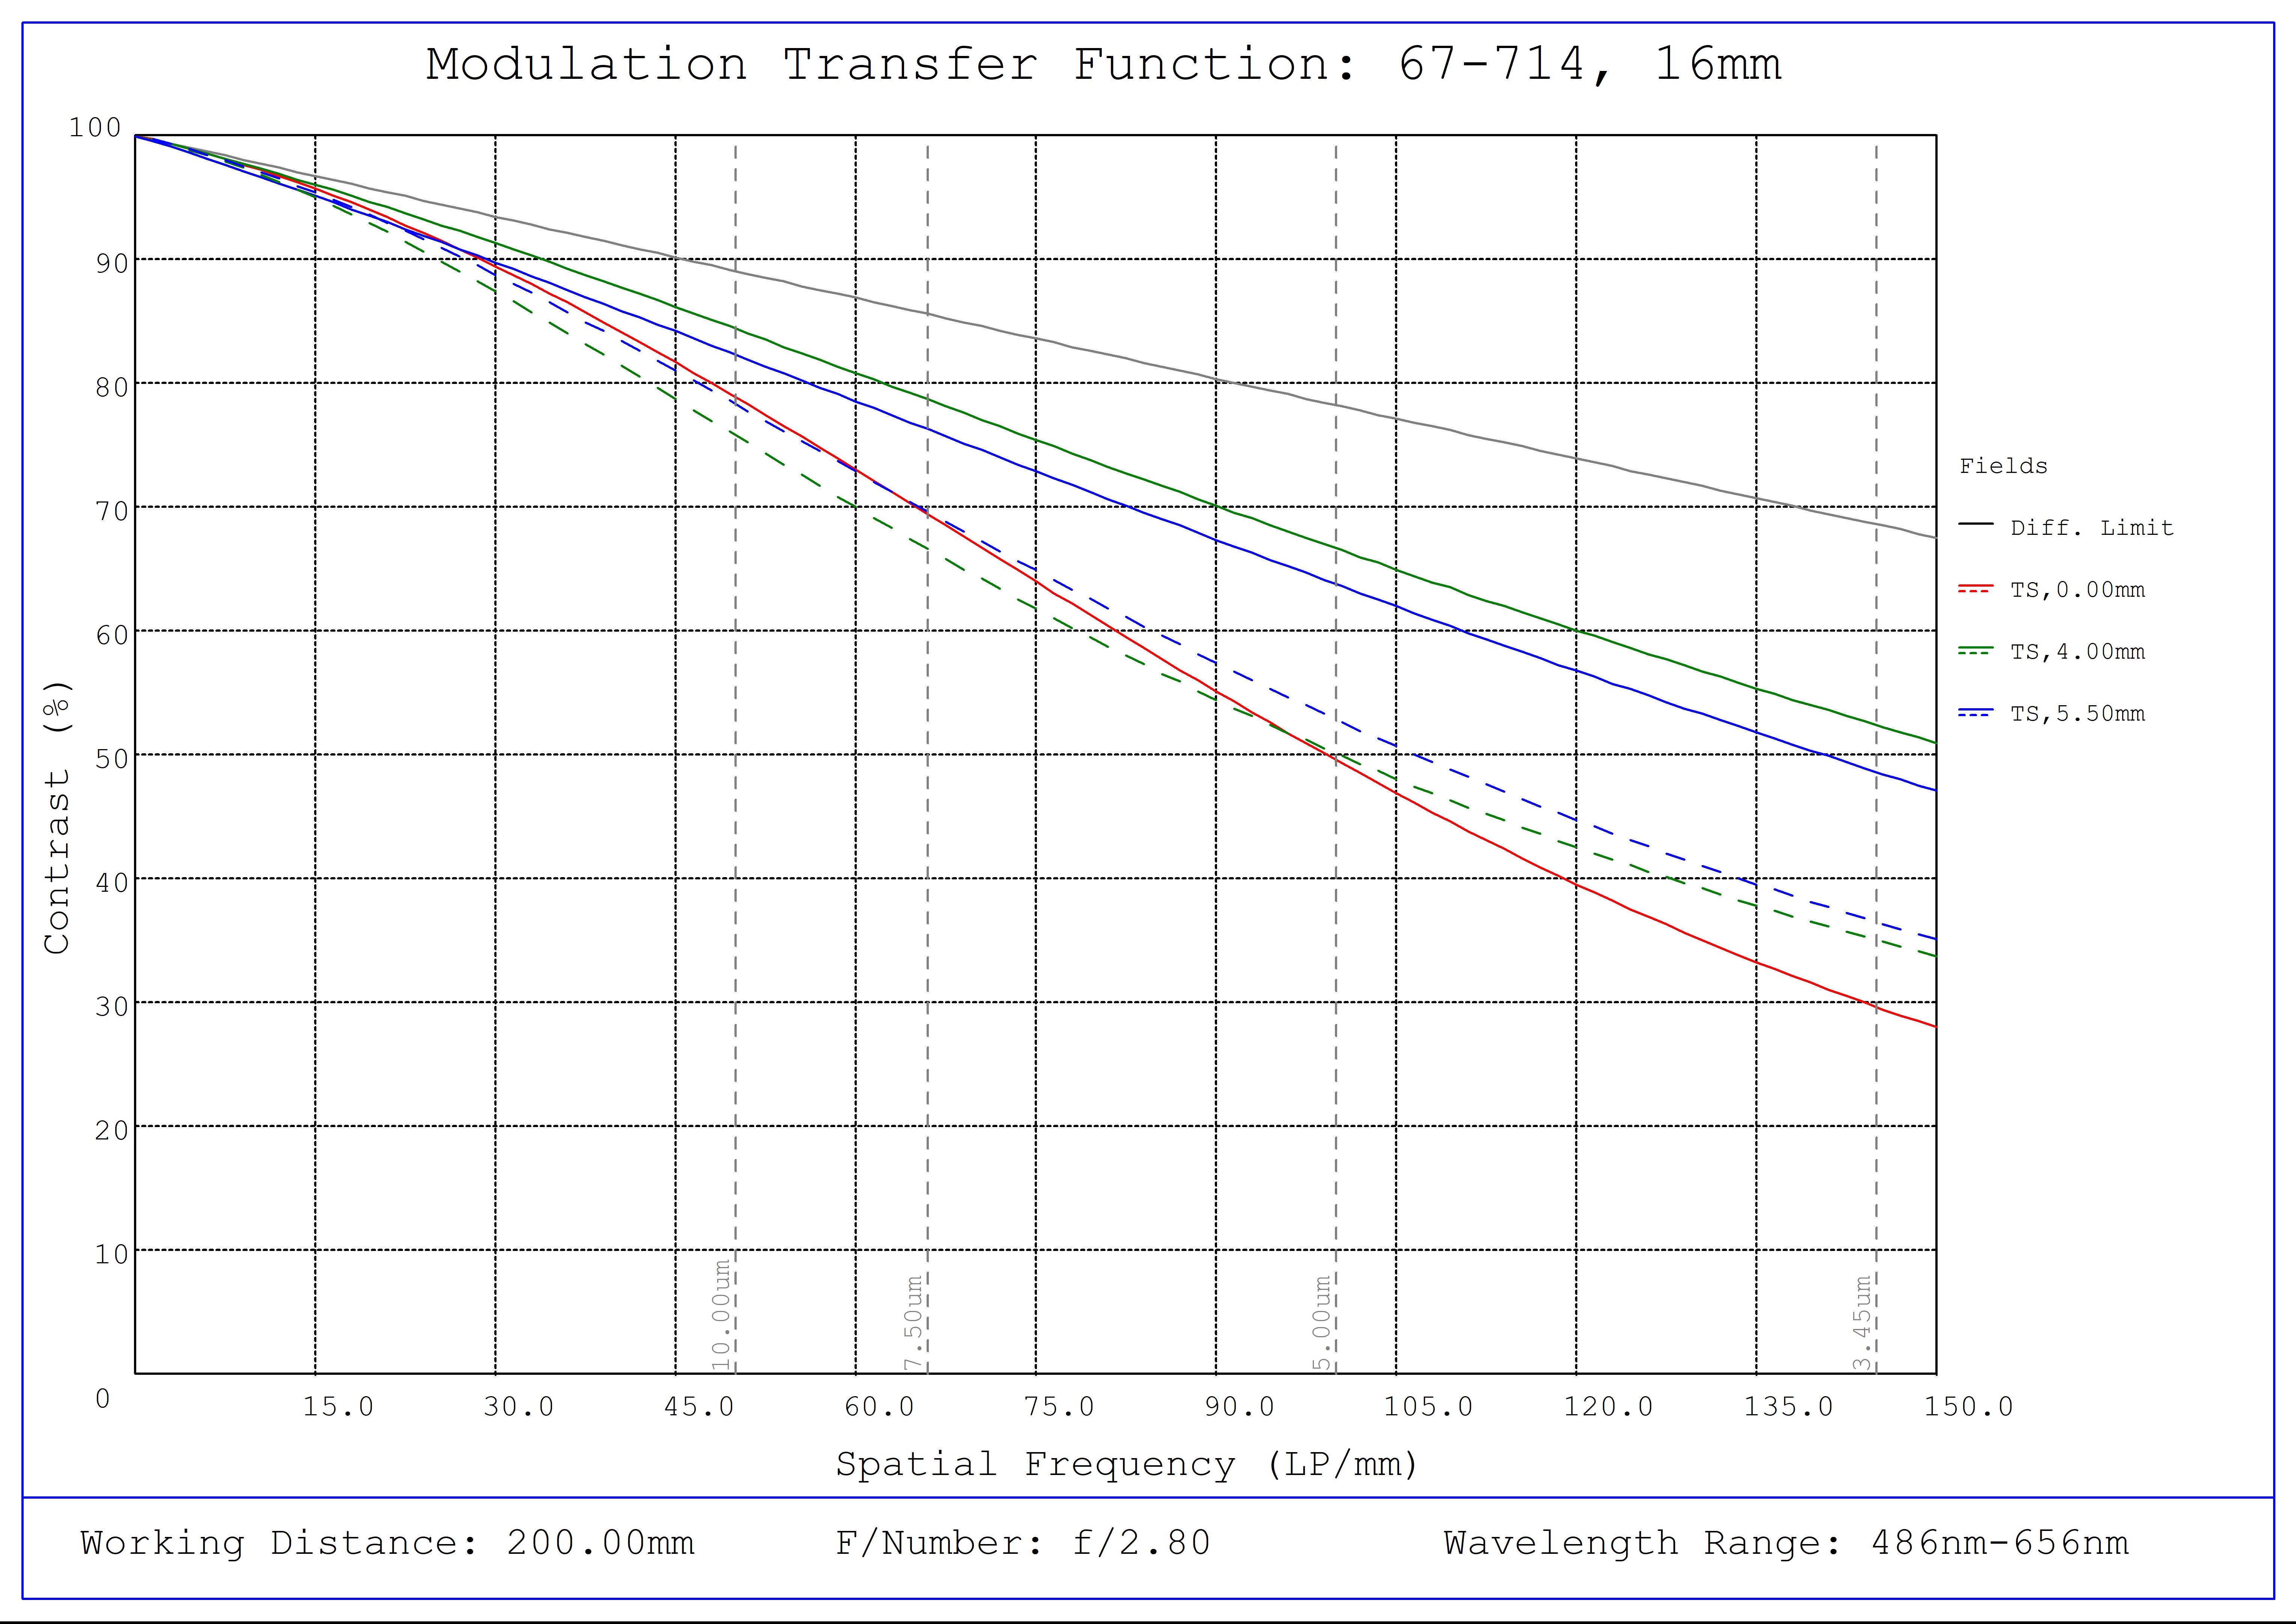 #67-714, 16mm C VIS-NIR Series Fixed Focal Length Lens, Modulated Transfer Function (MTF) Plot, 200mm Working Distance, f2.8